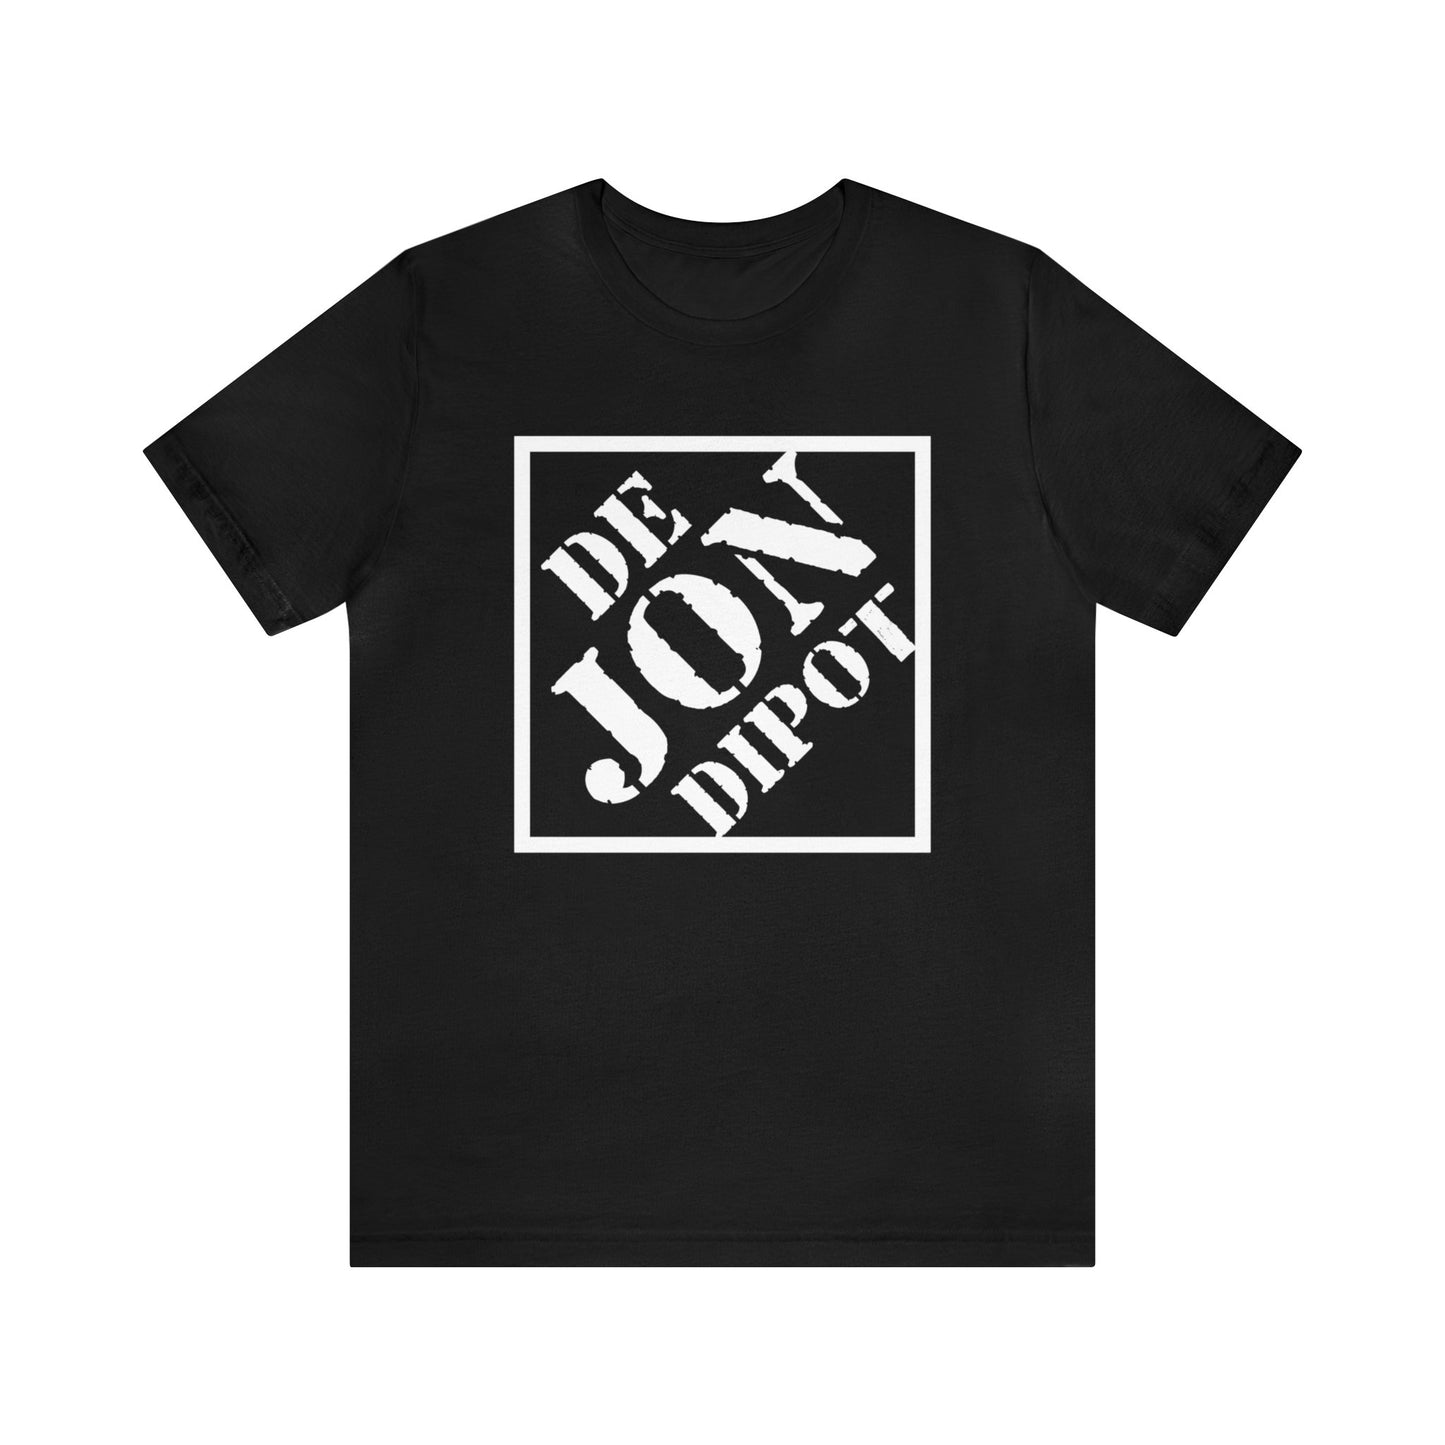 The Jon Dipot T-Shirt - Home Depot Parody